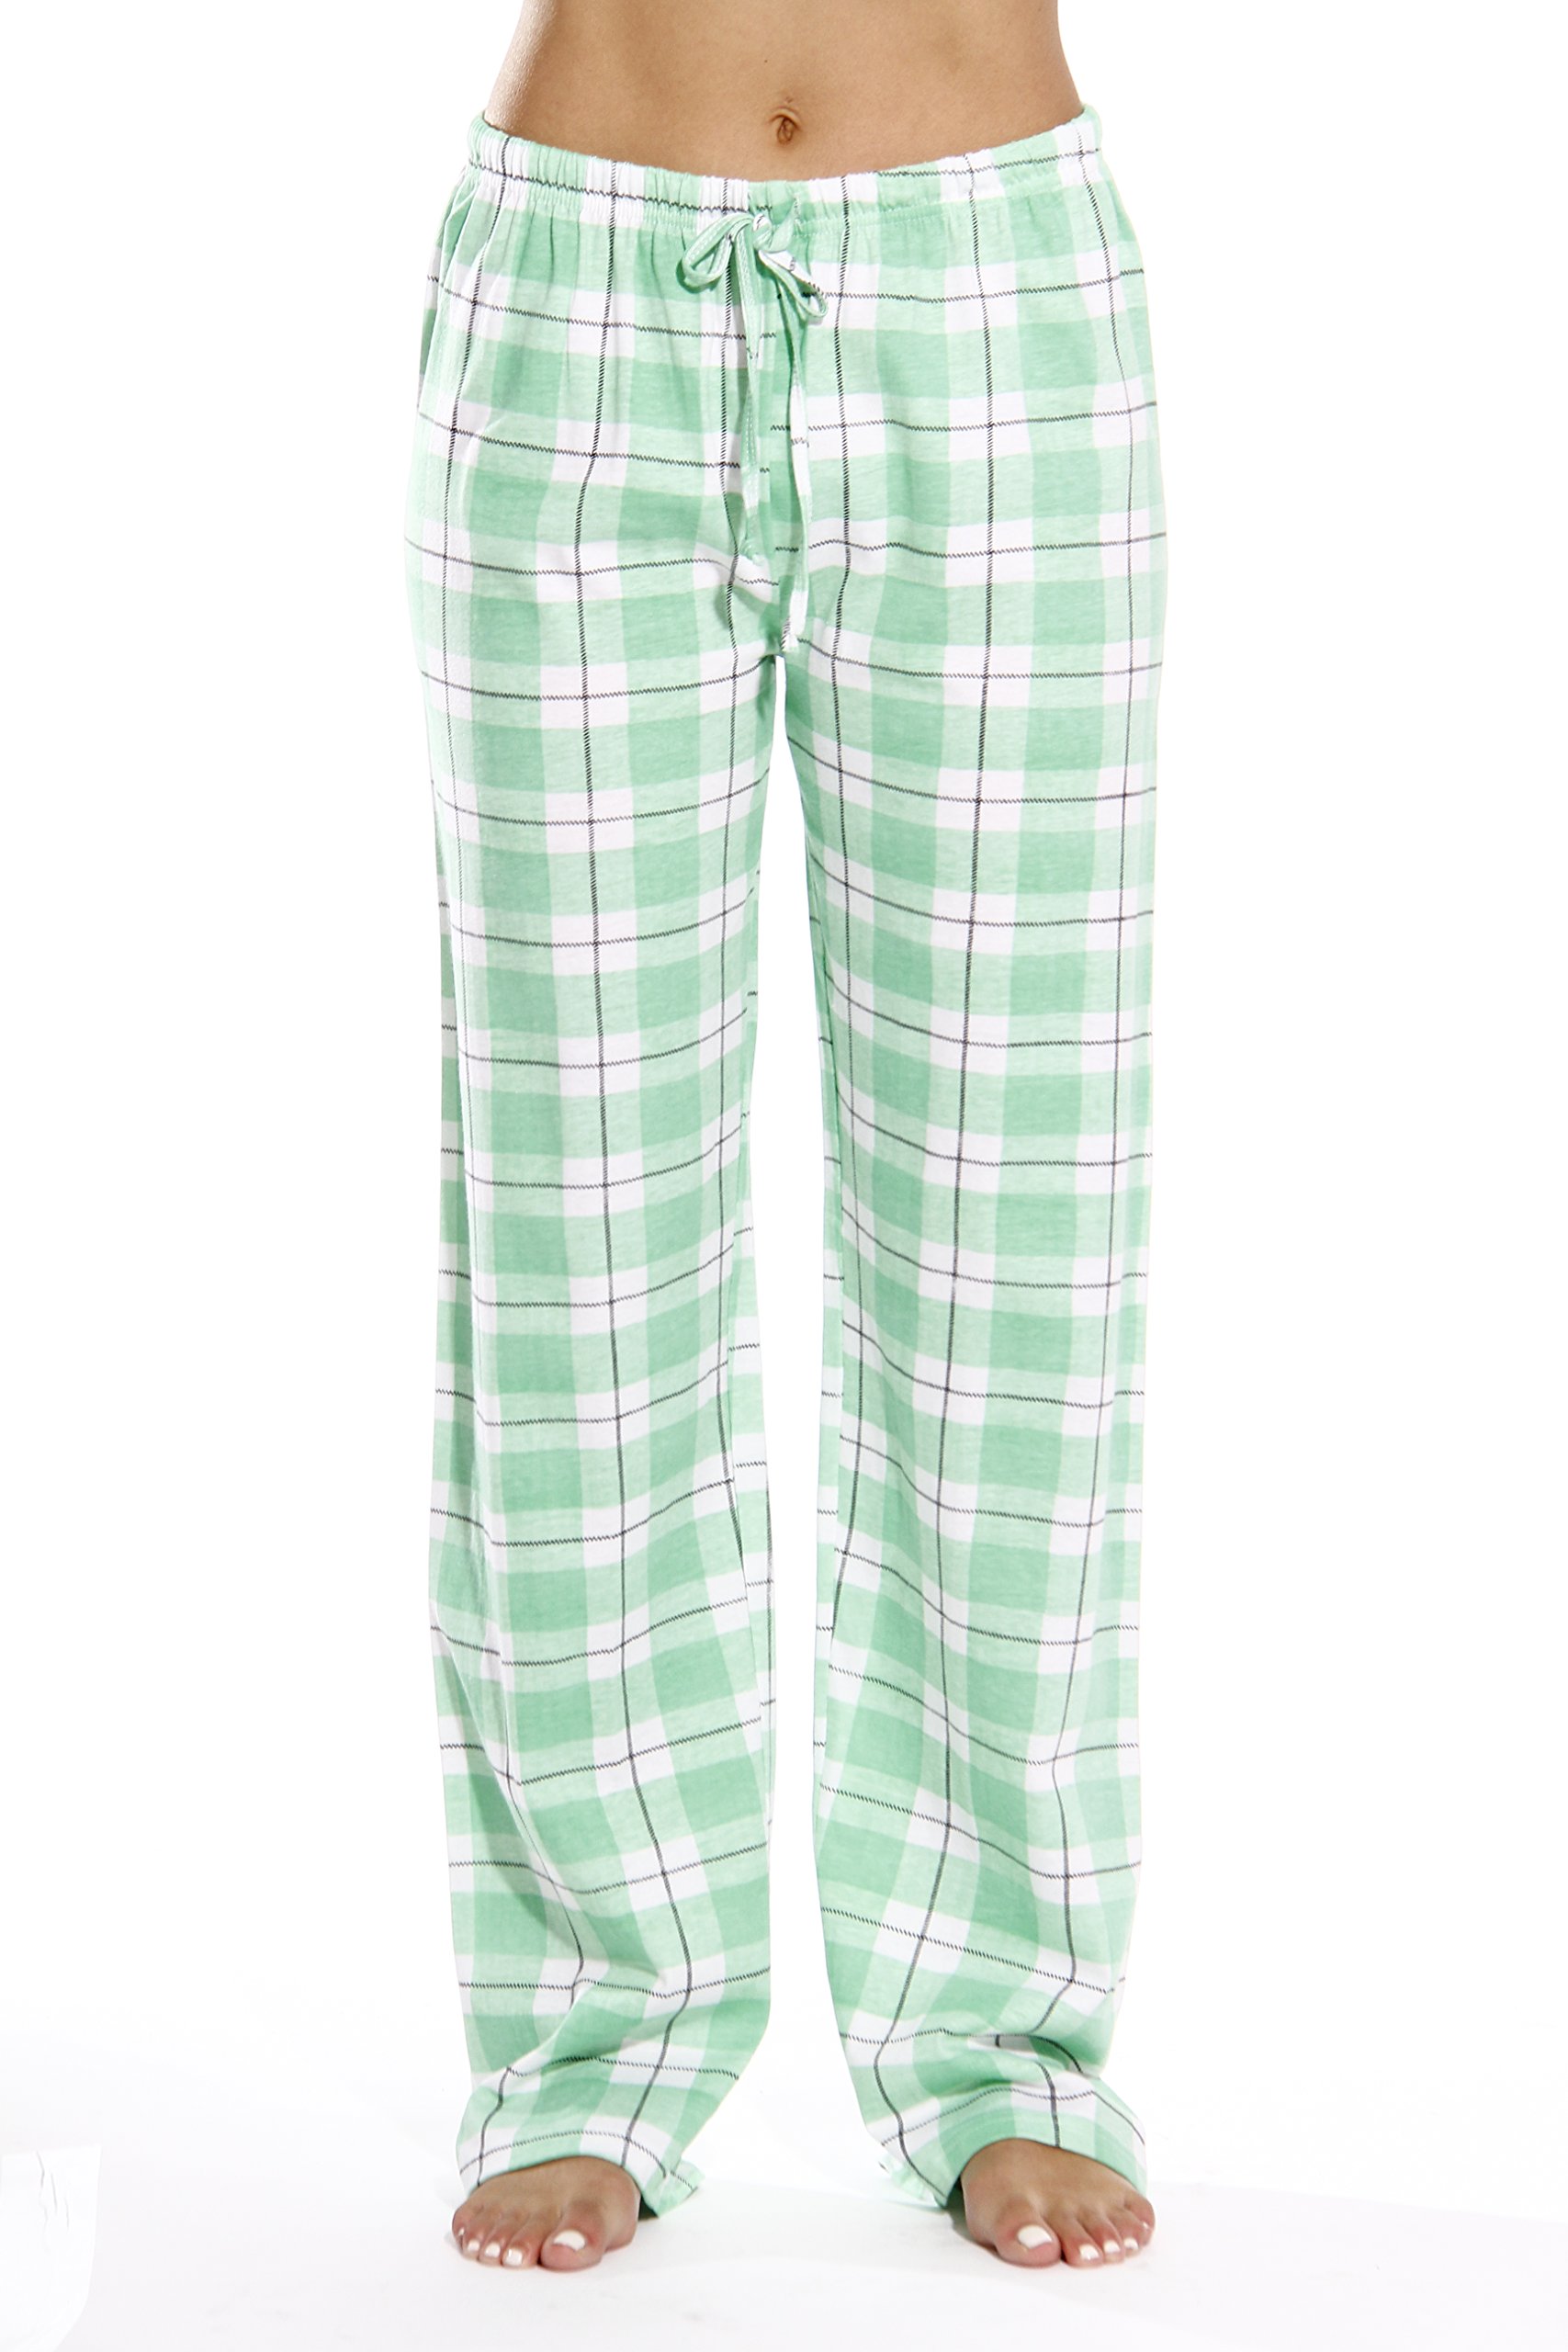 Just Love 100% Cotton Women's Capri Pajama Pants Sleepwear